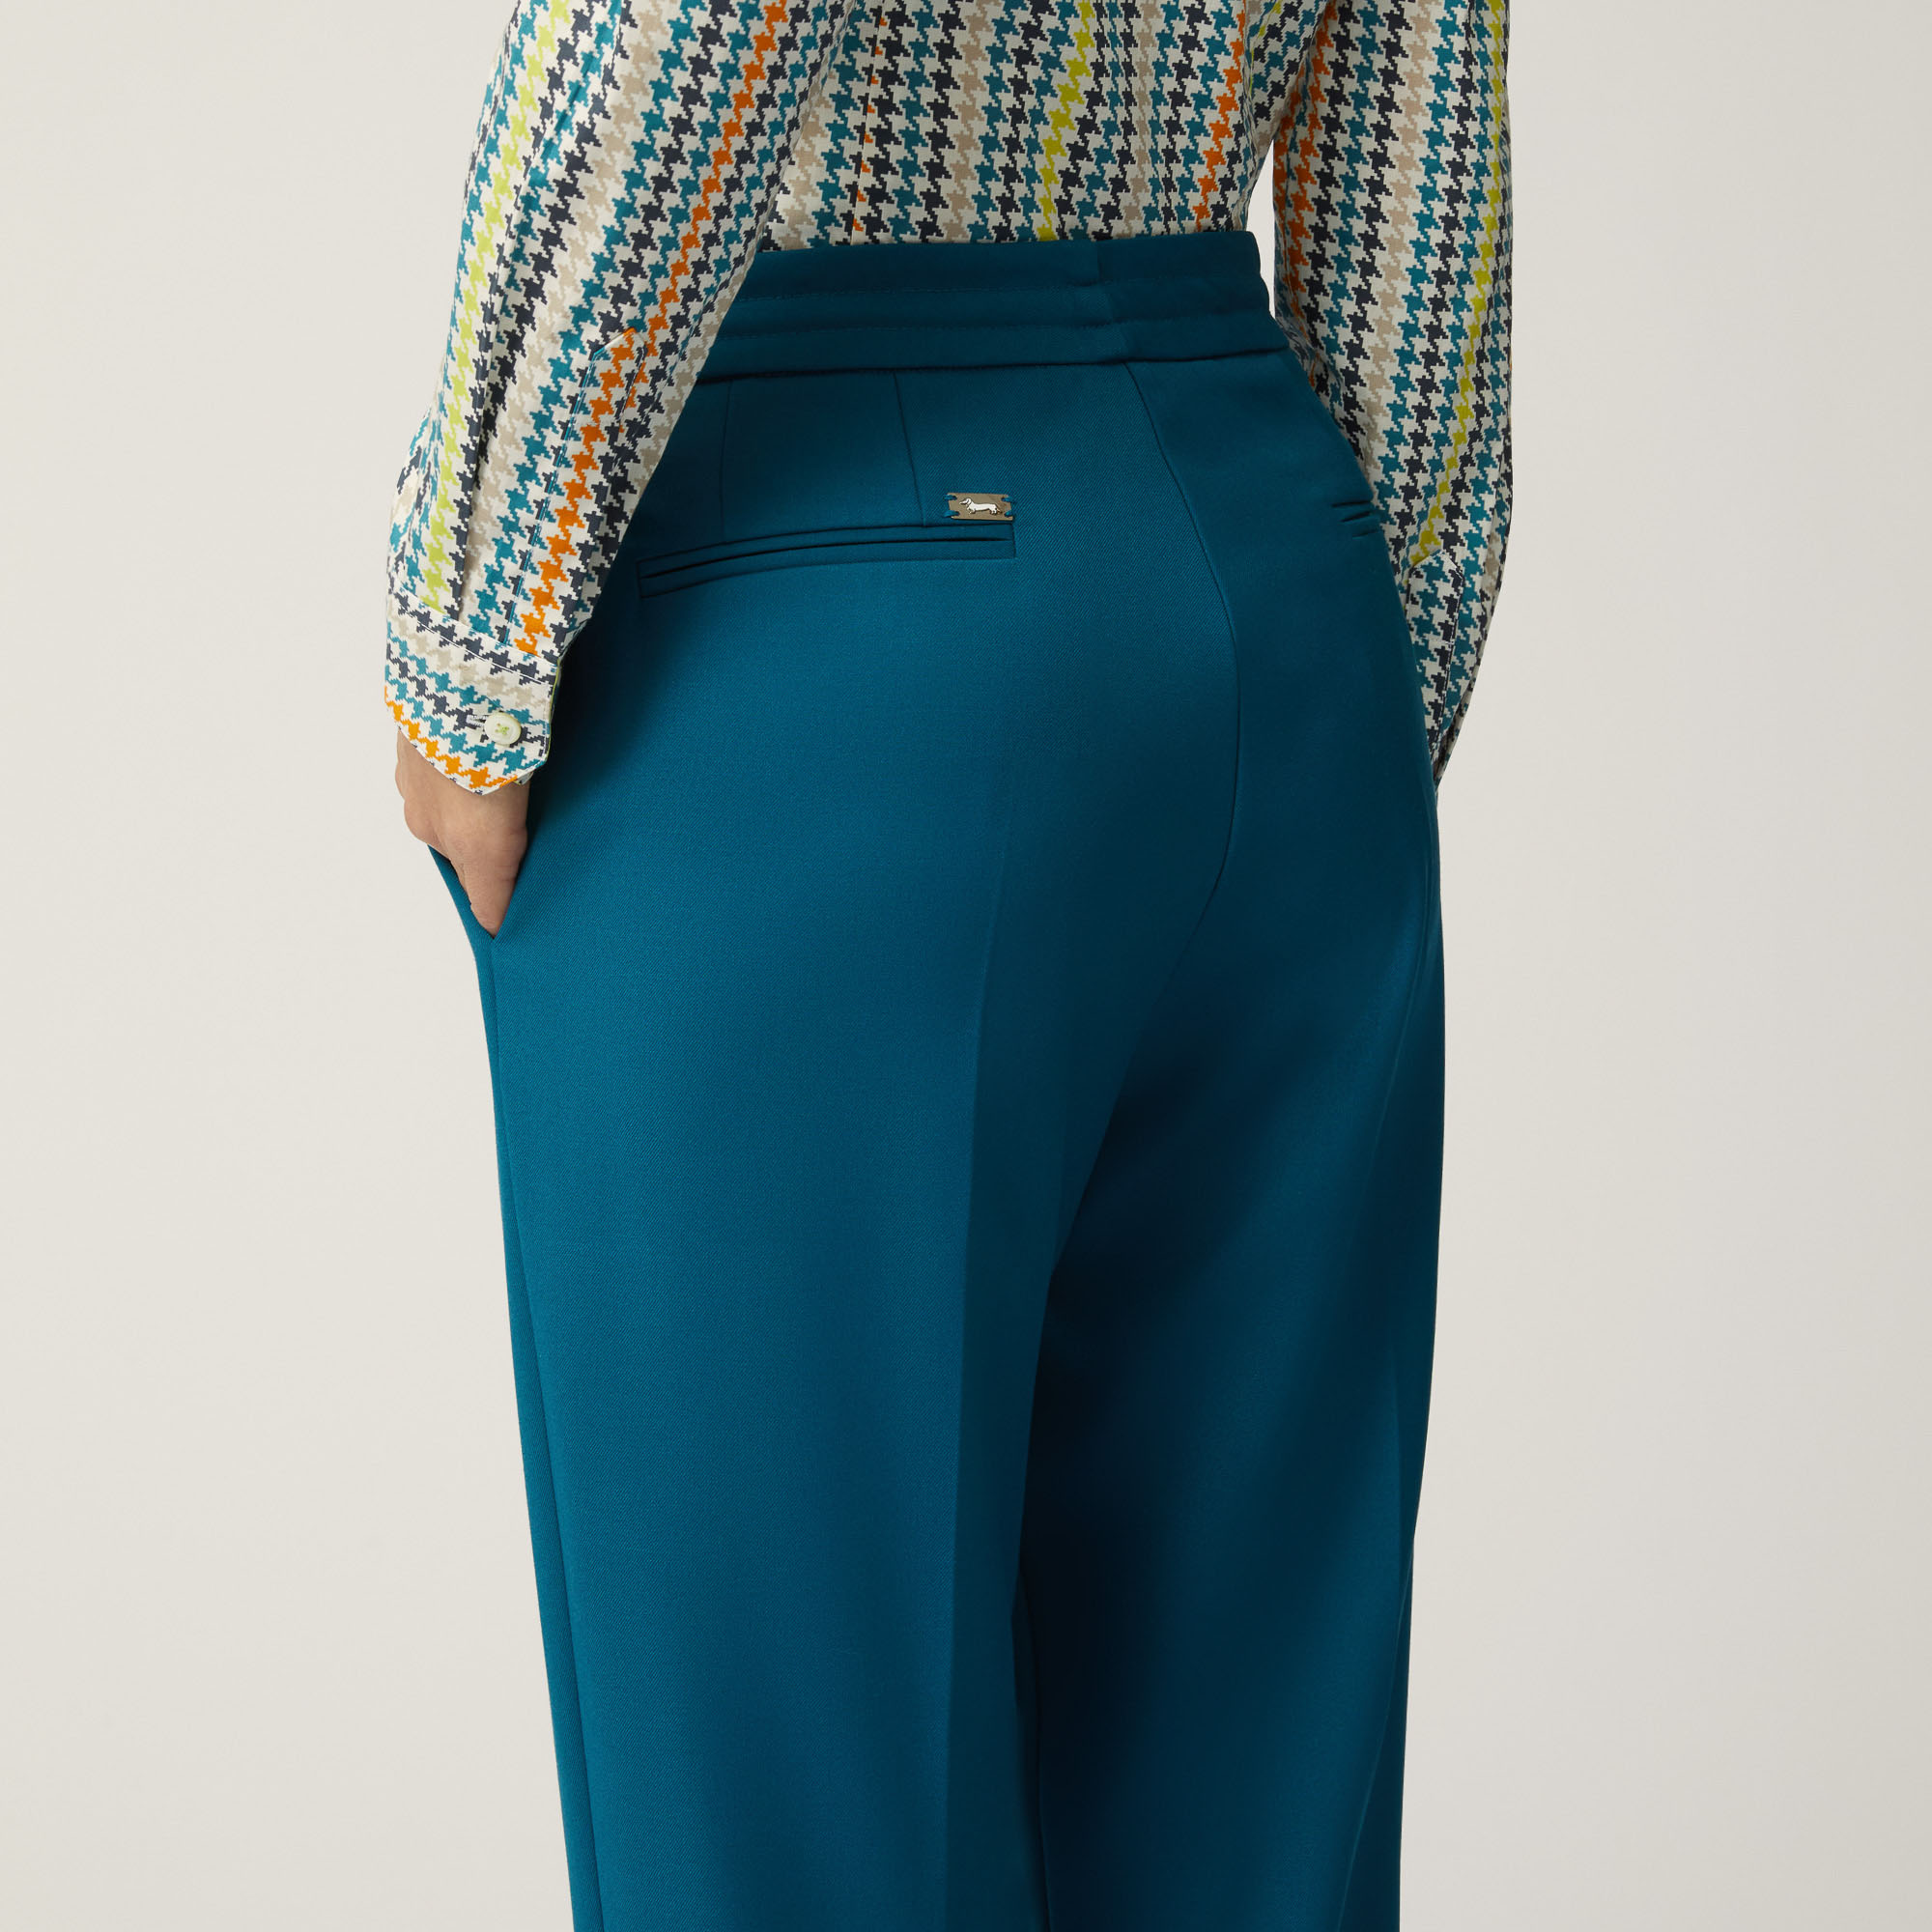 Pantalone Con Coulisse In Vita, Blu, large